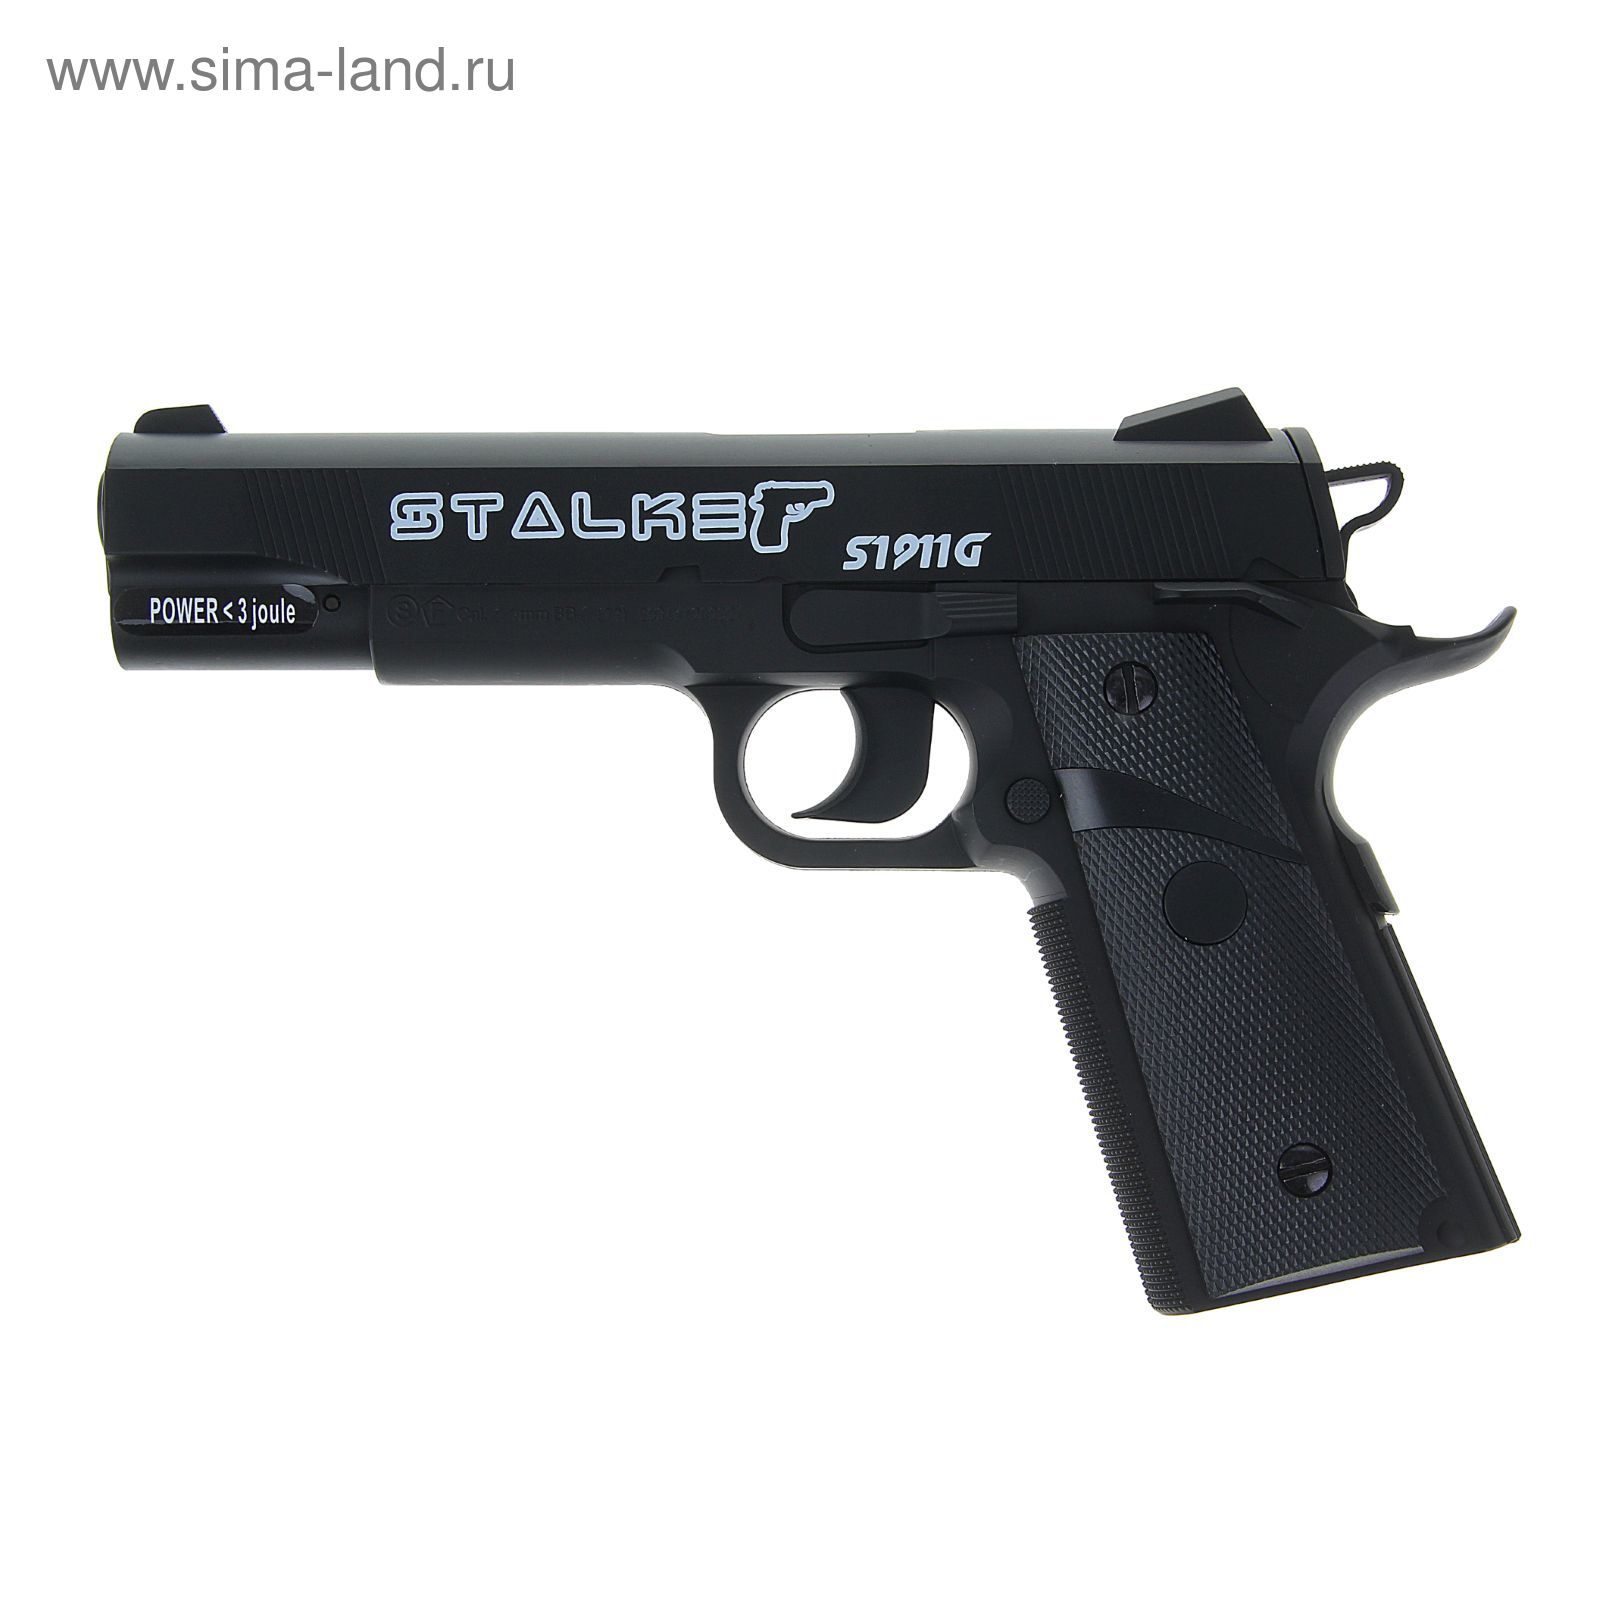 Пистолет пневматический Stalker S1911G  4,5мм, пластик